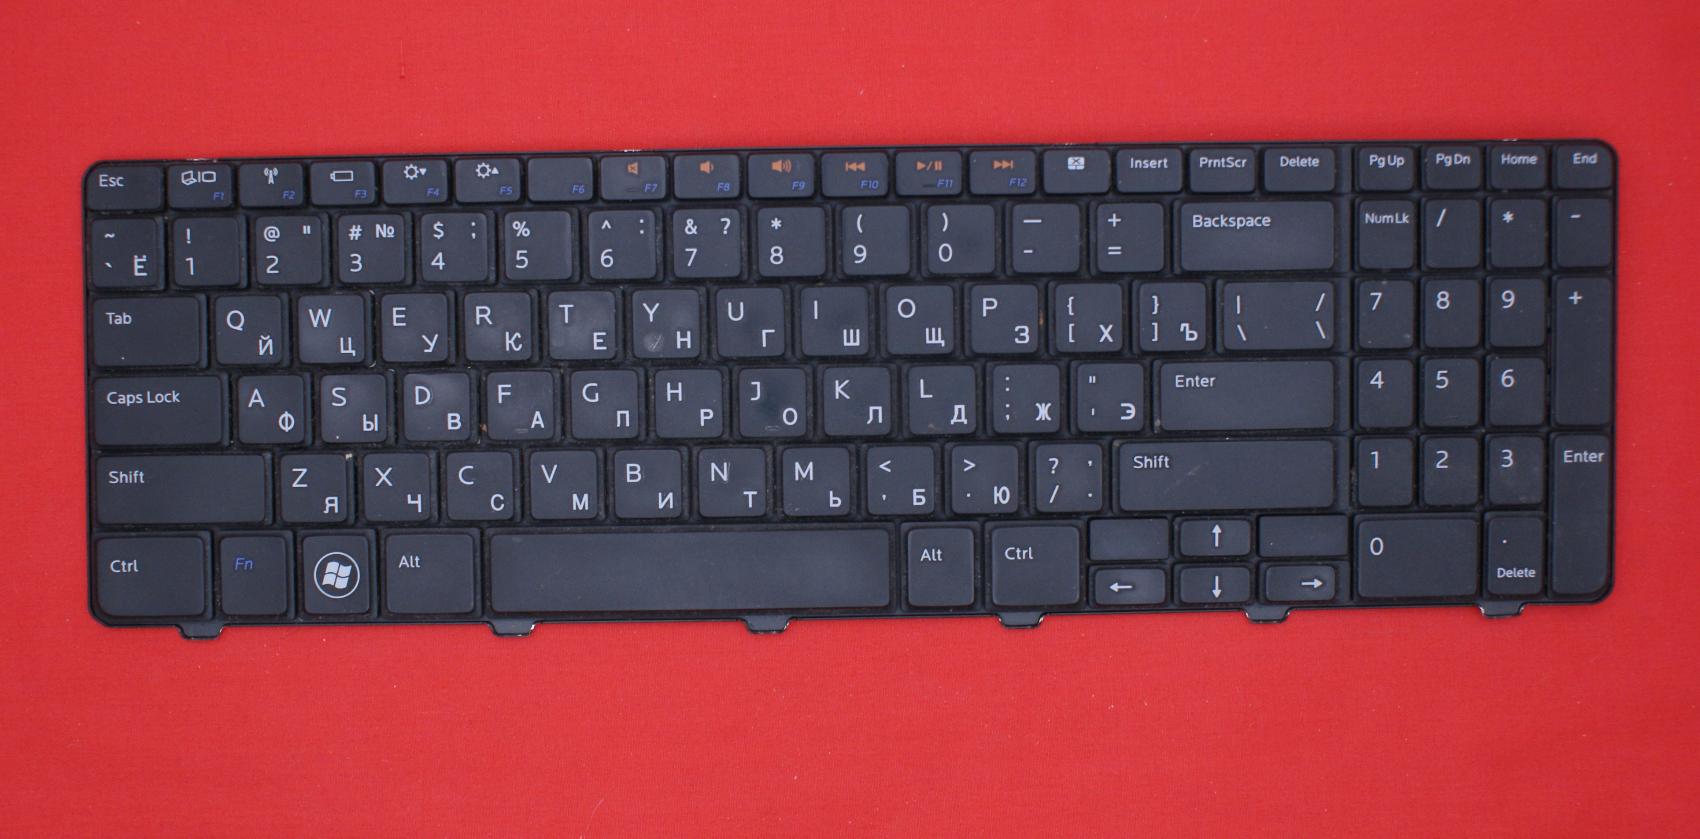 Клавиатура для ноутбука Dell Inspiron N5010